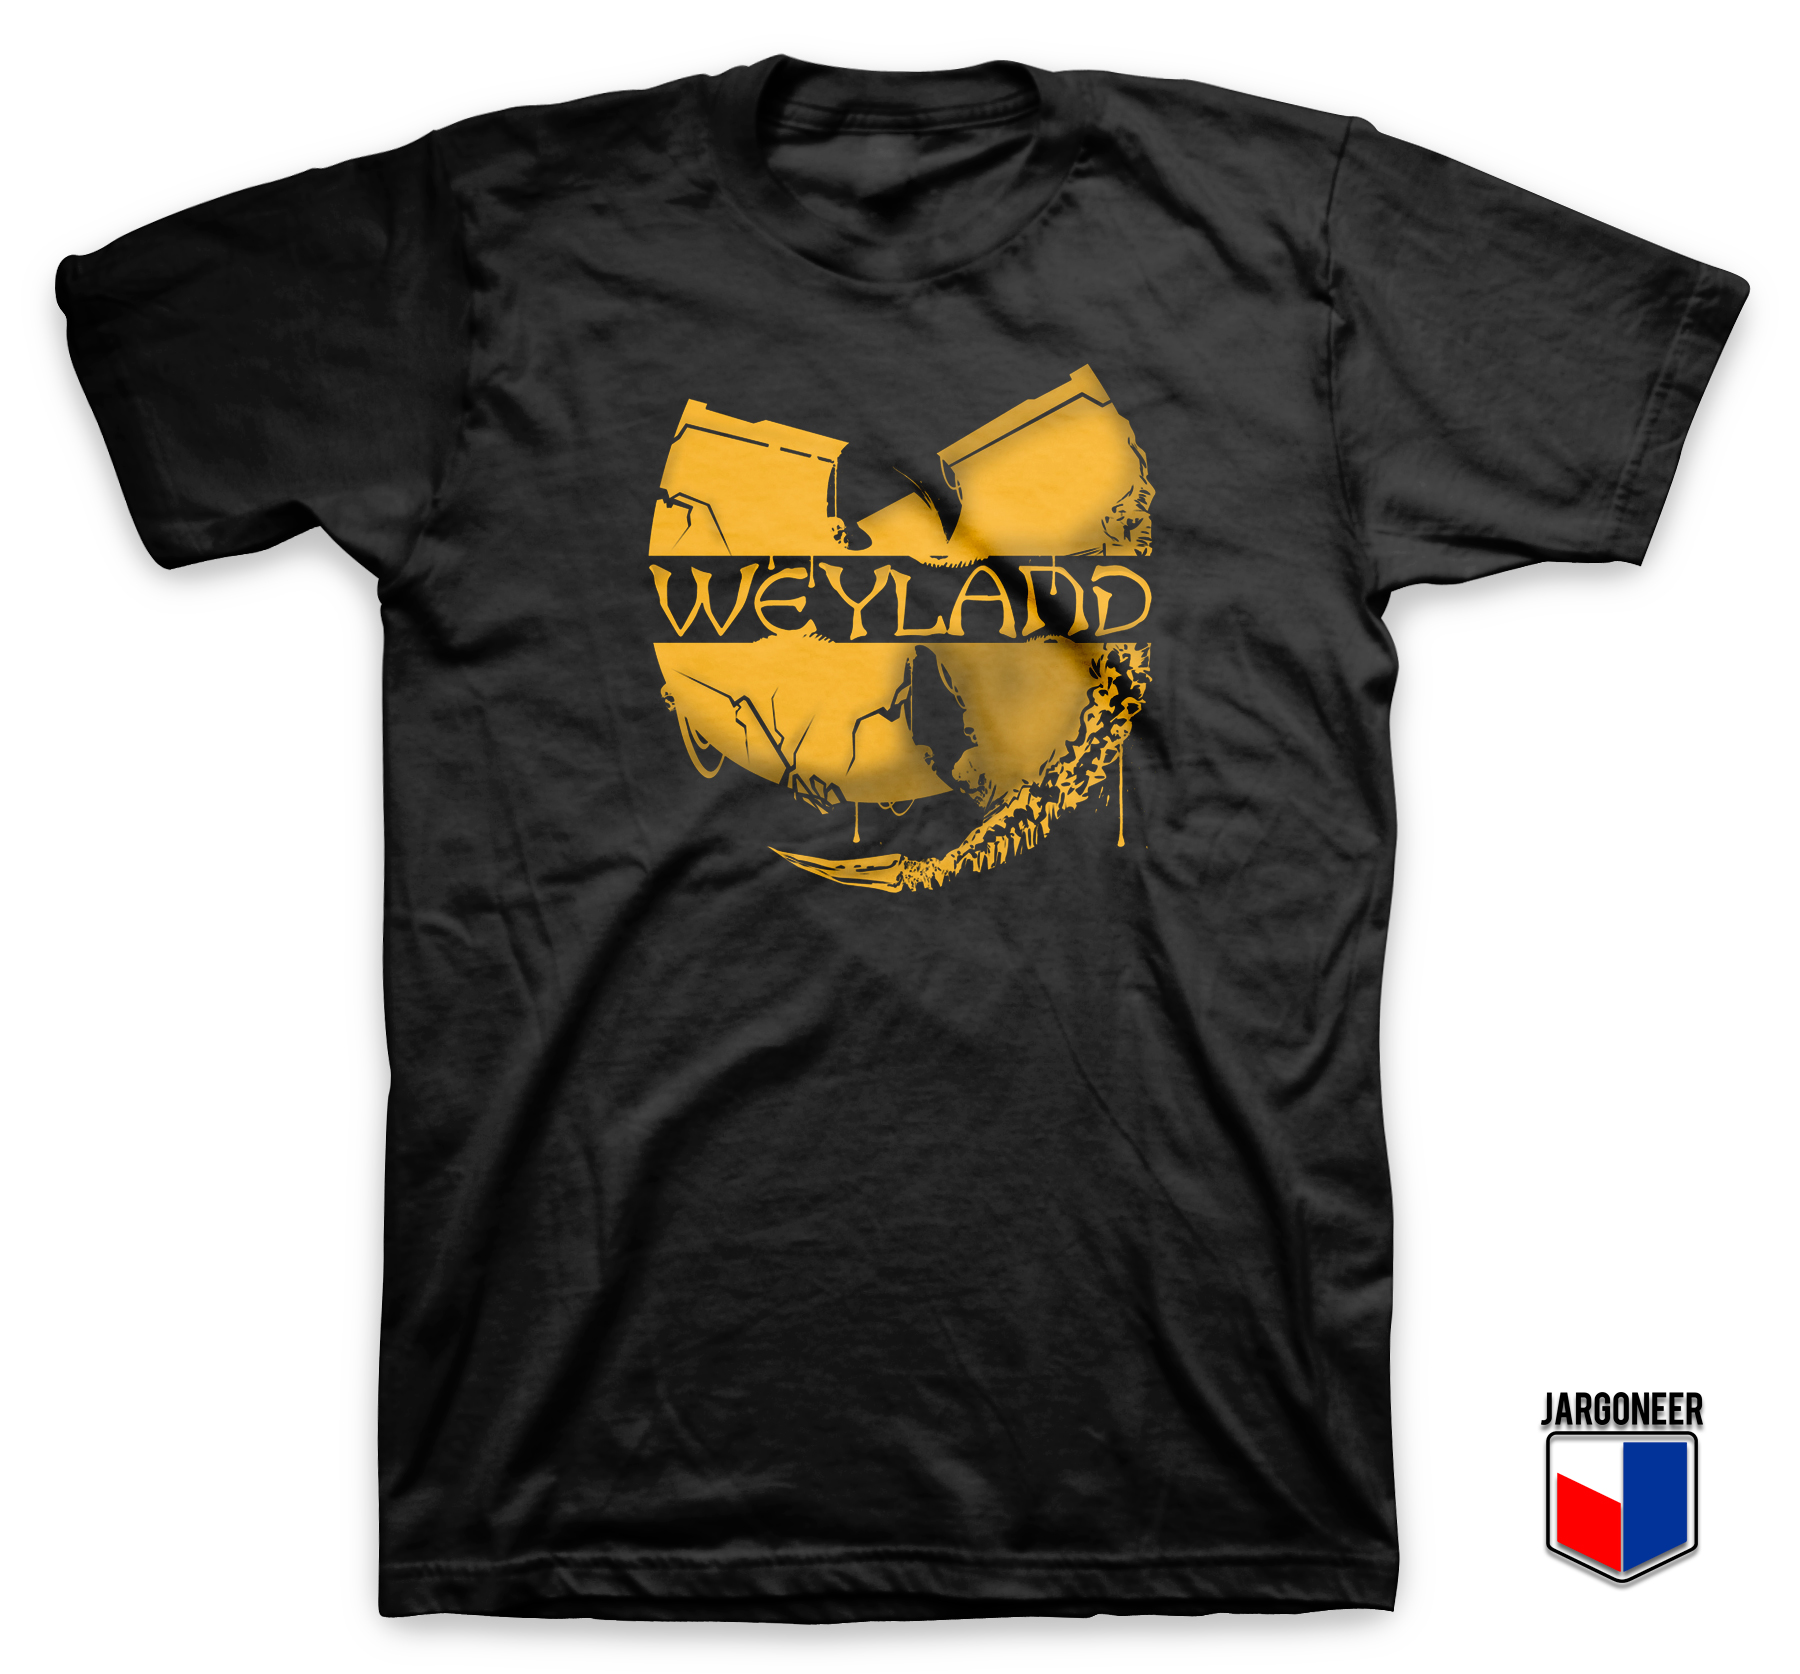 Cool Wu Tang Weyland Parody T Shirt Design - Shop Unique Graphic Cool Shirt Designs